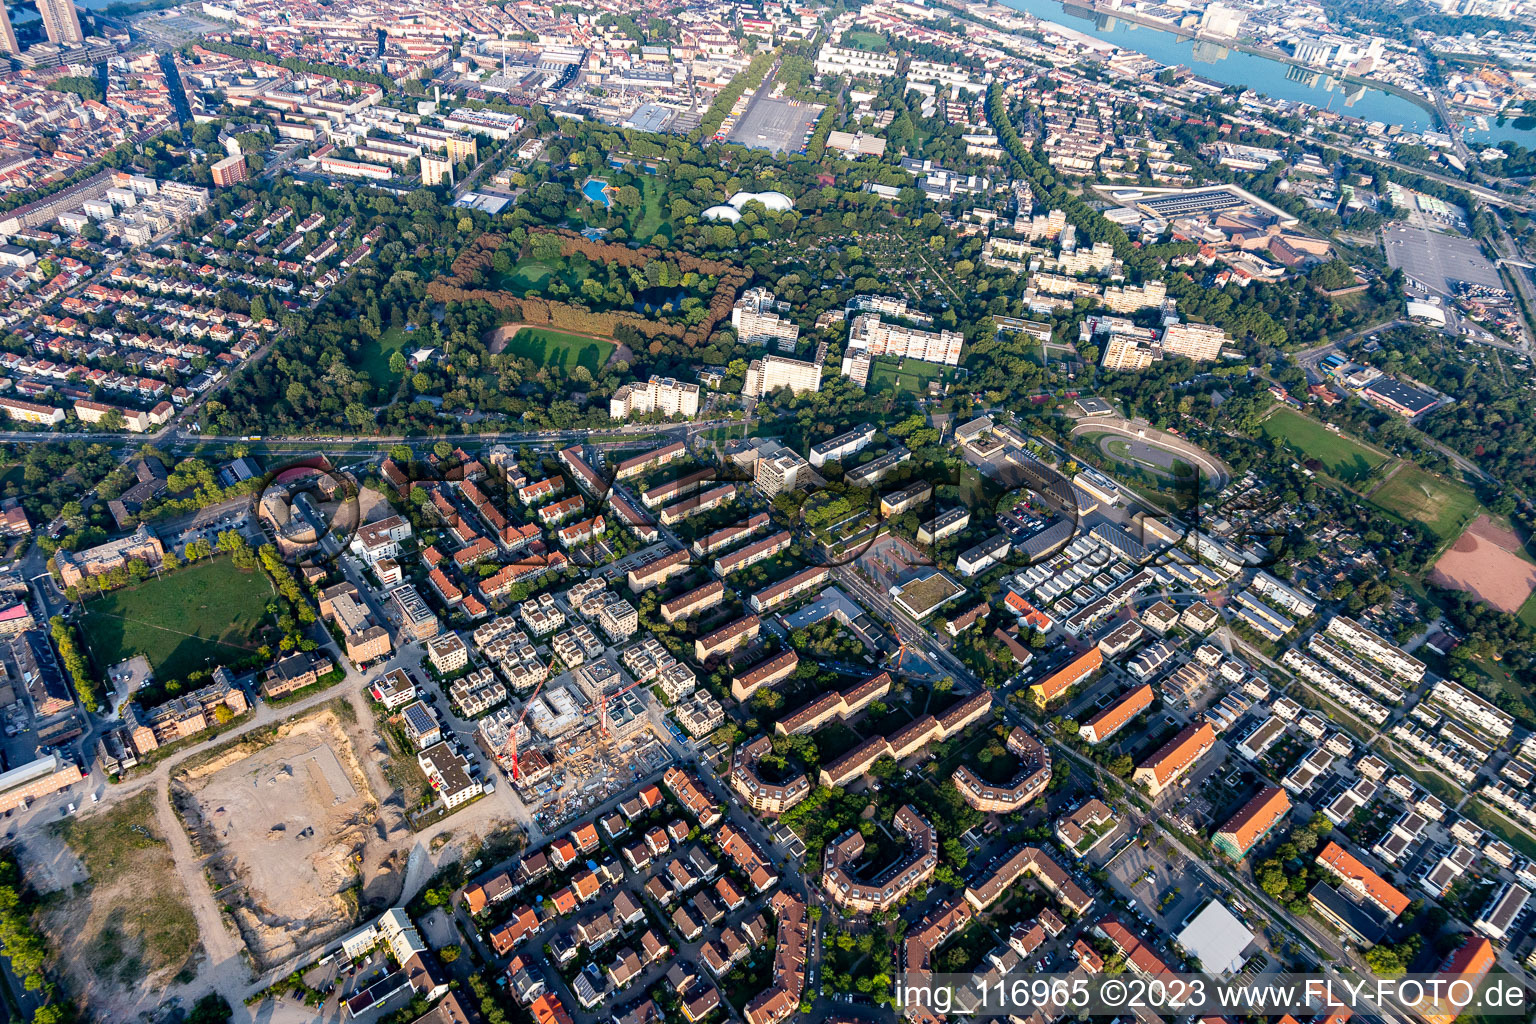 Aerial view of Neckarstadt East, Herzogenriedpark in the district Neckarstadt-Ost in Mannheim in the state Baden-Wuerttemberg, Germany